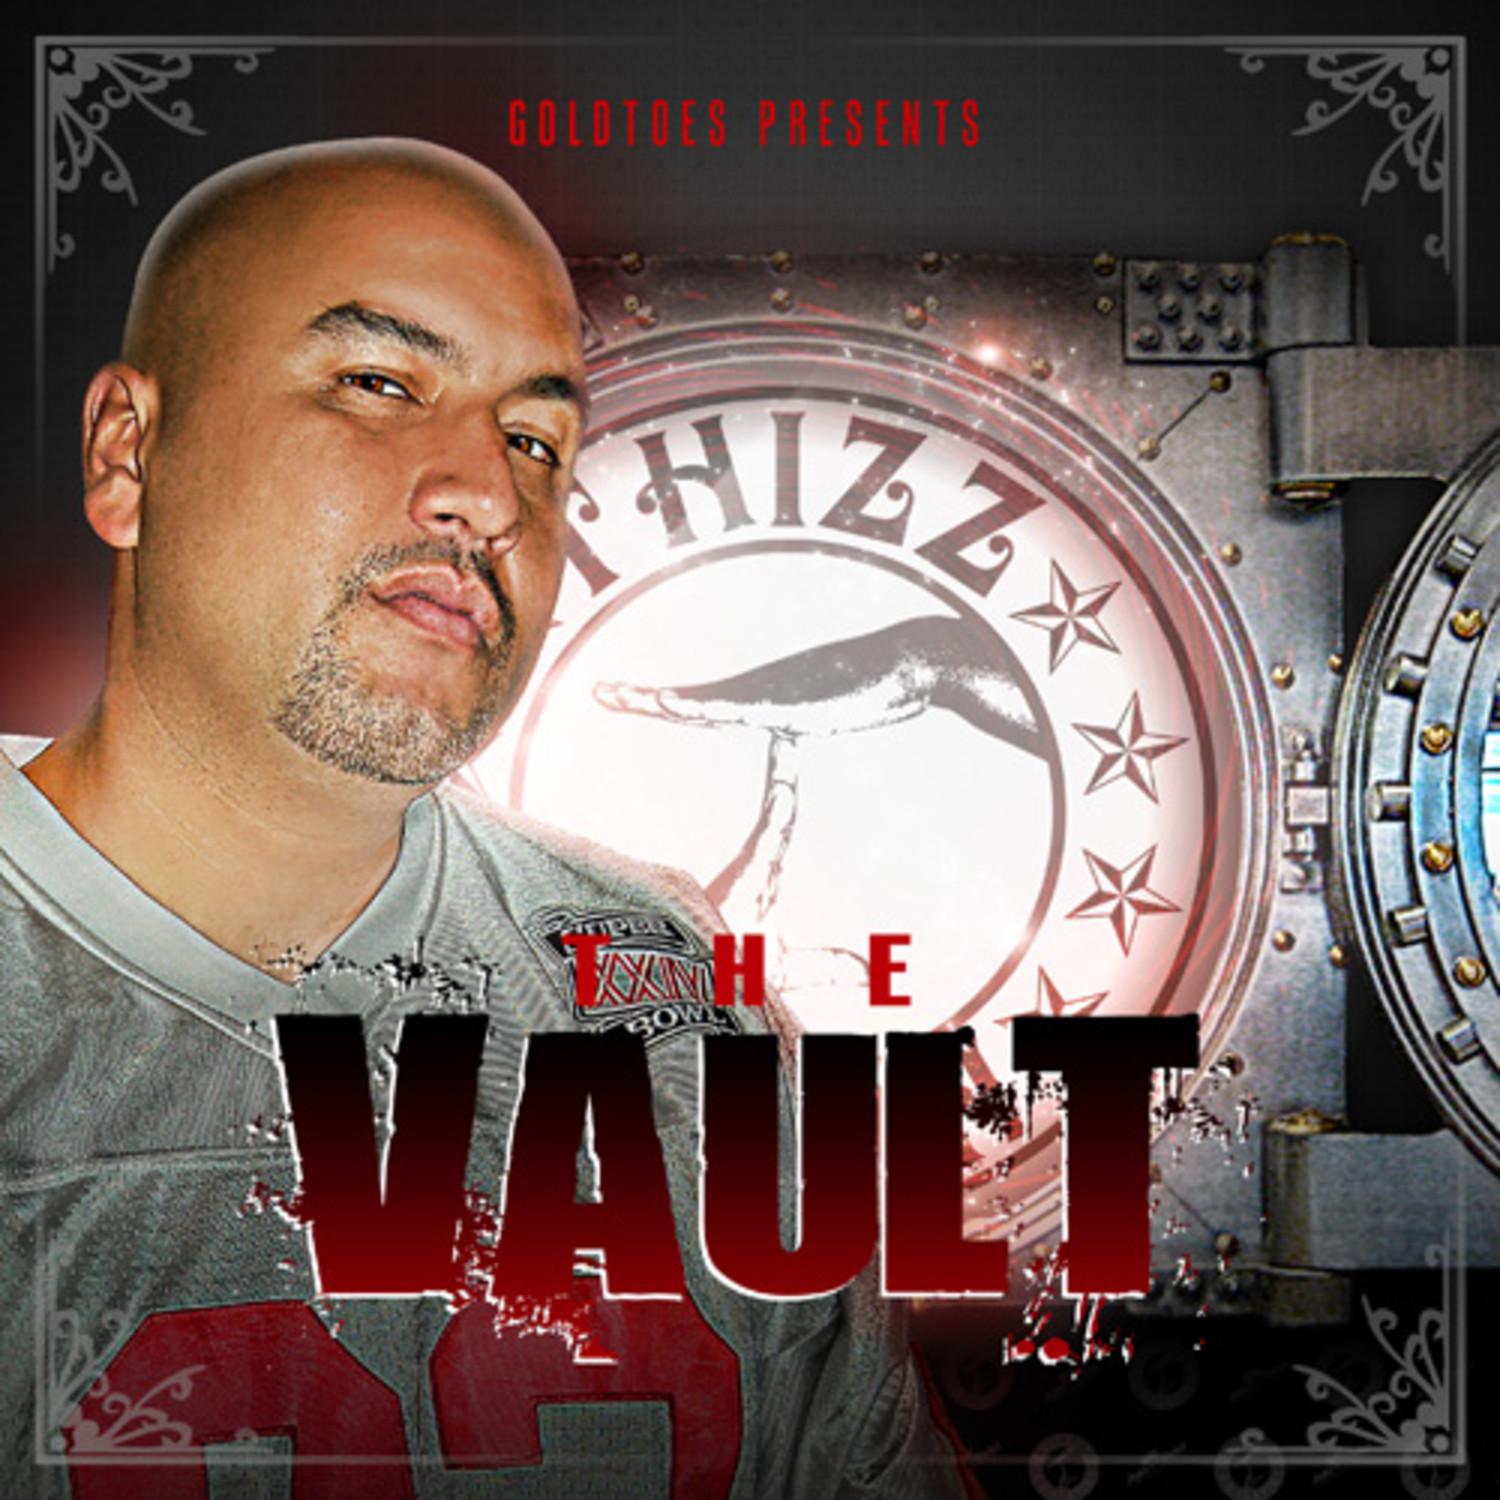 Goldtoes Presents: The Vault